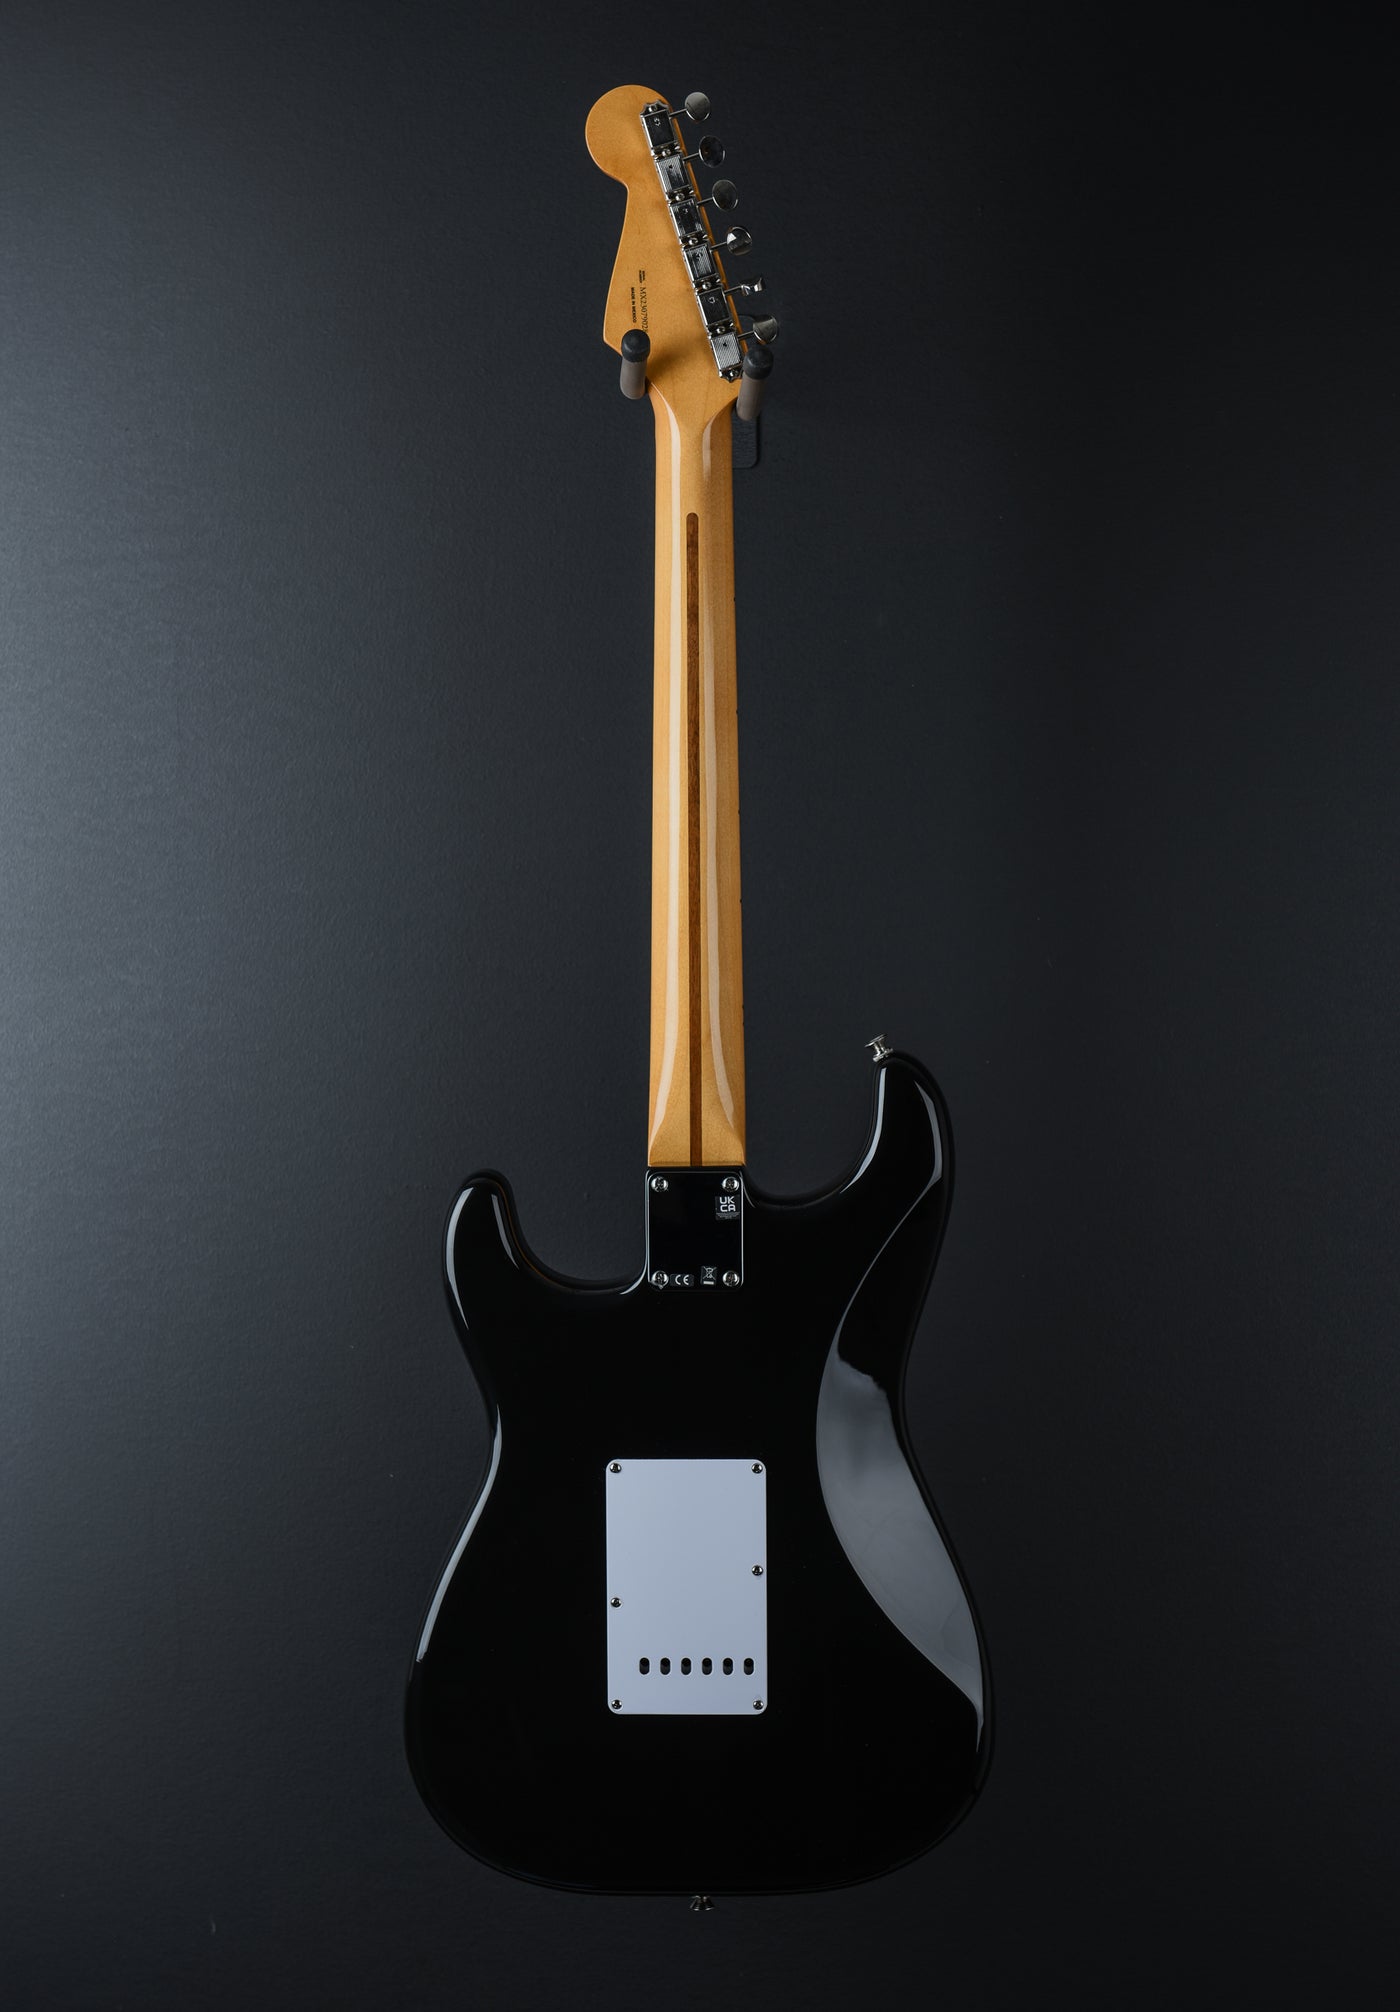 Vintera II 50's Stratocaster - Black